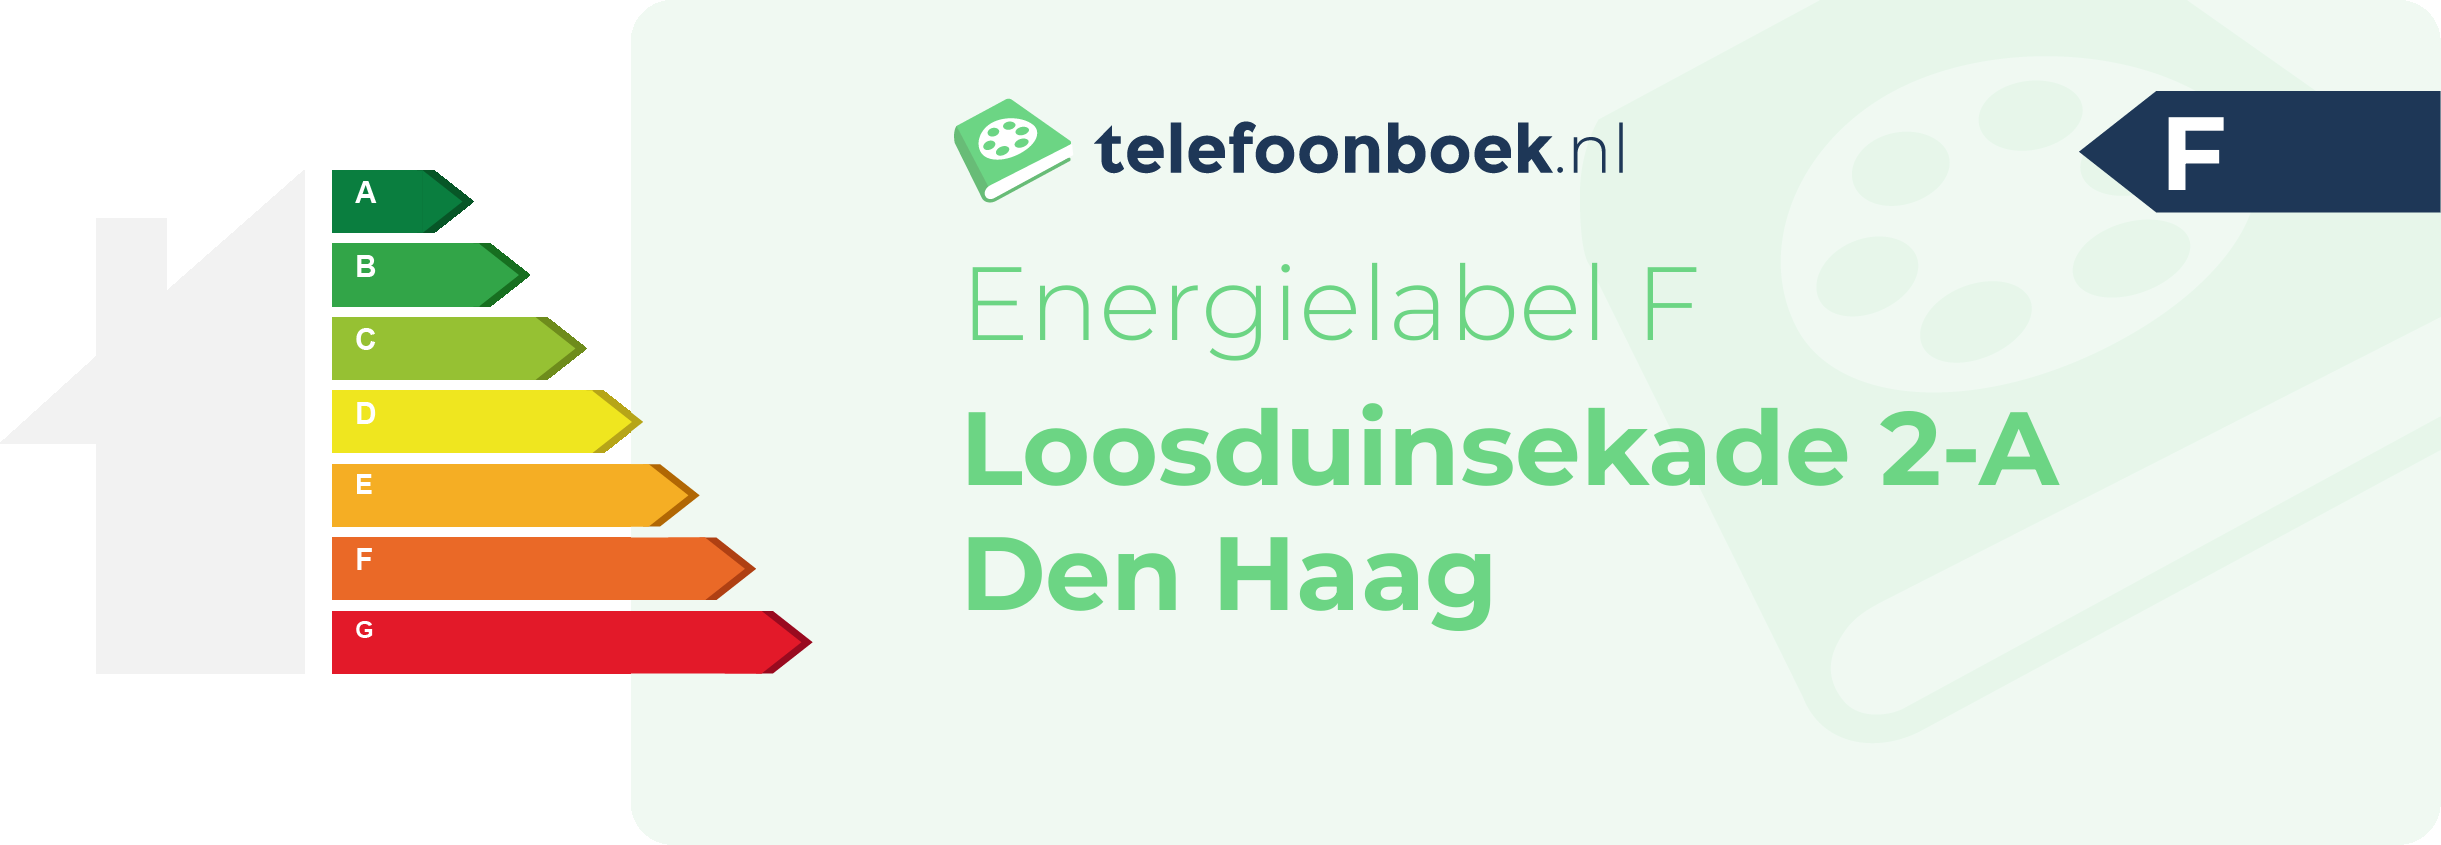 Energielabel Loosduinsekade 2-A Den Haag